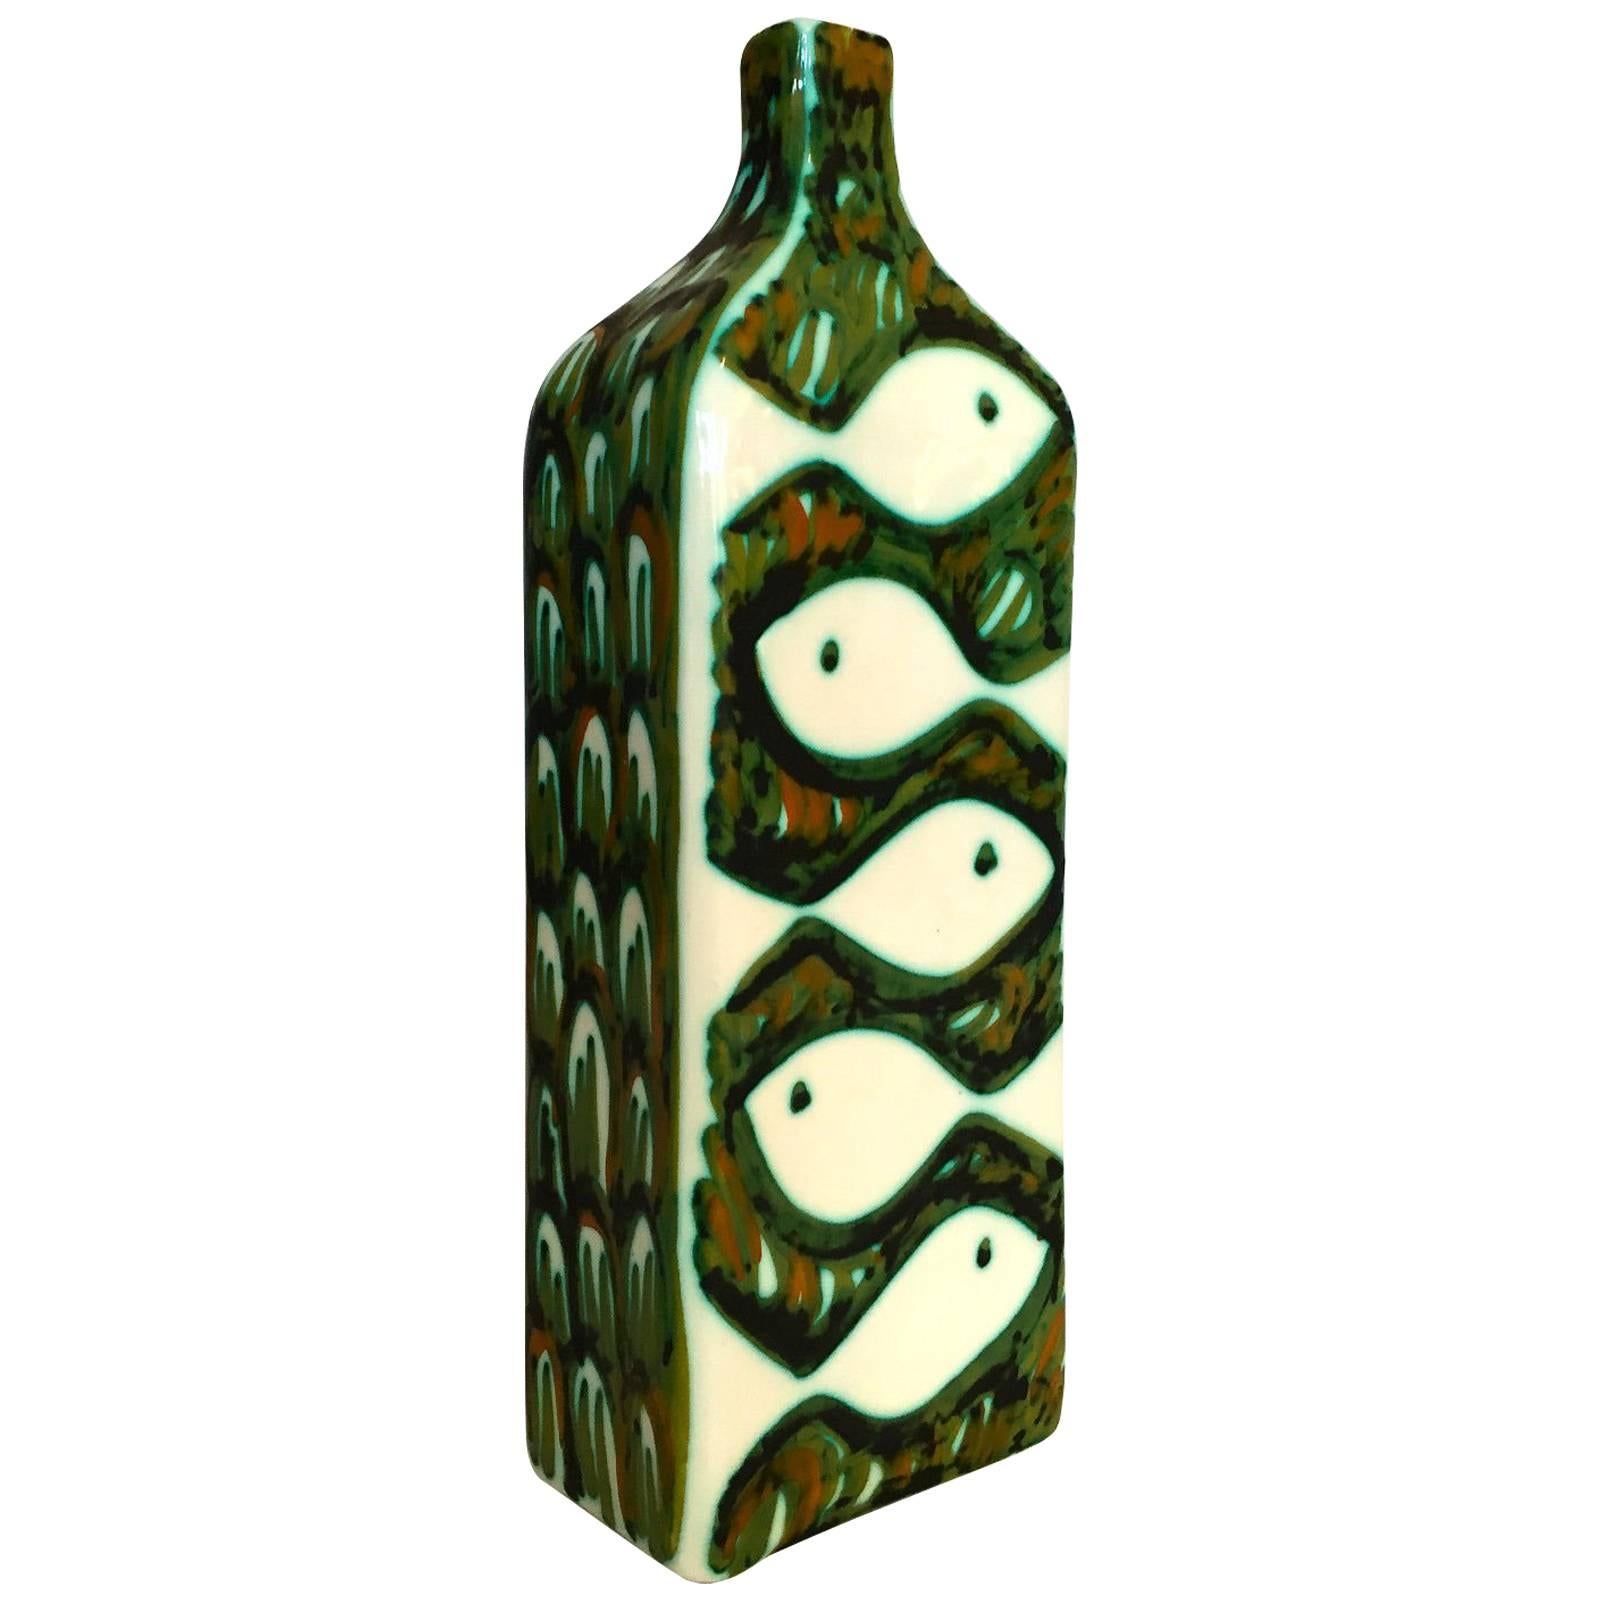 Alessio Tasca Raymor Ceramic Vase Signed, Italy, 1960s